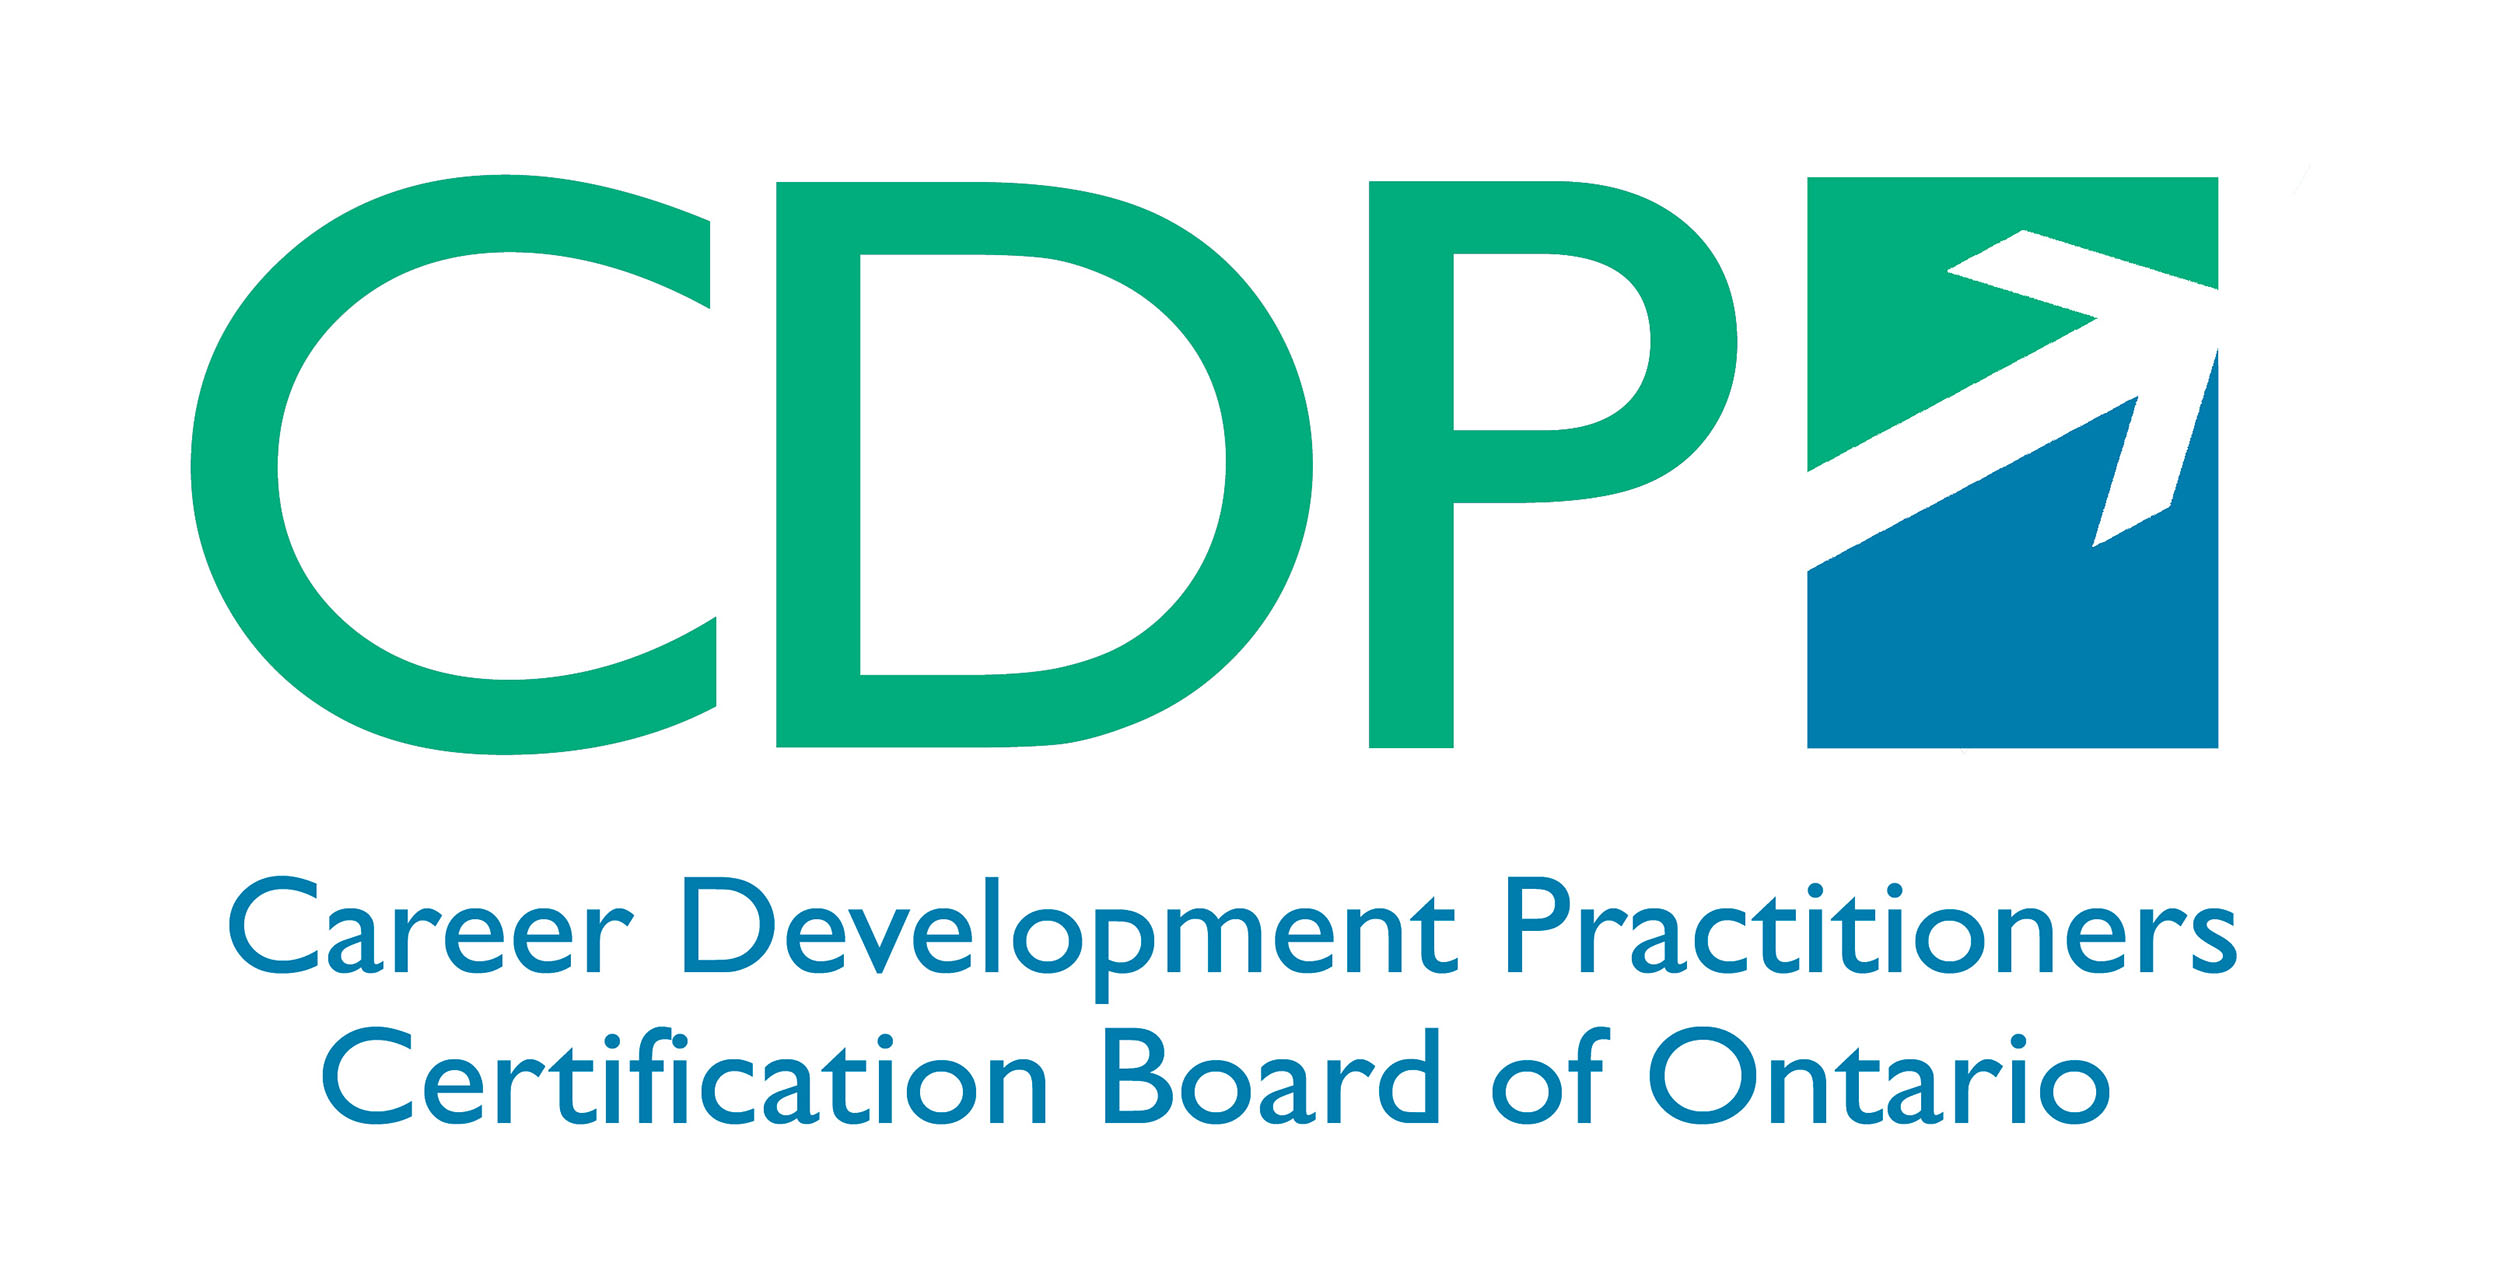 Career Development Practitioners Certification Board of Ontario logo